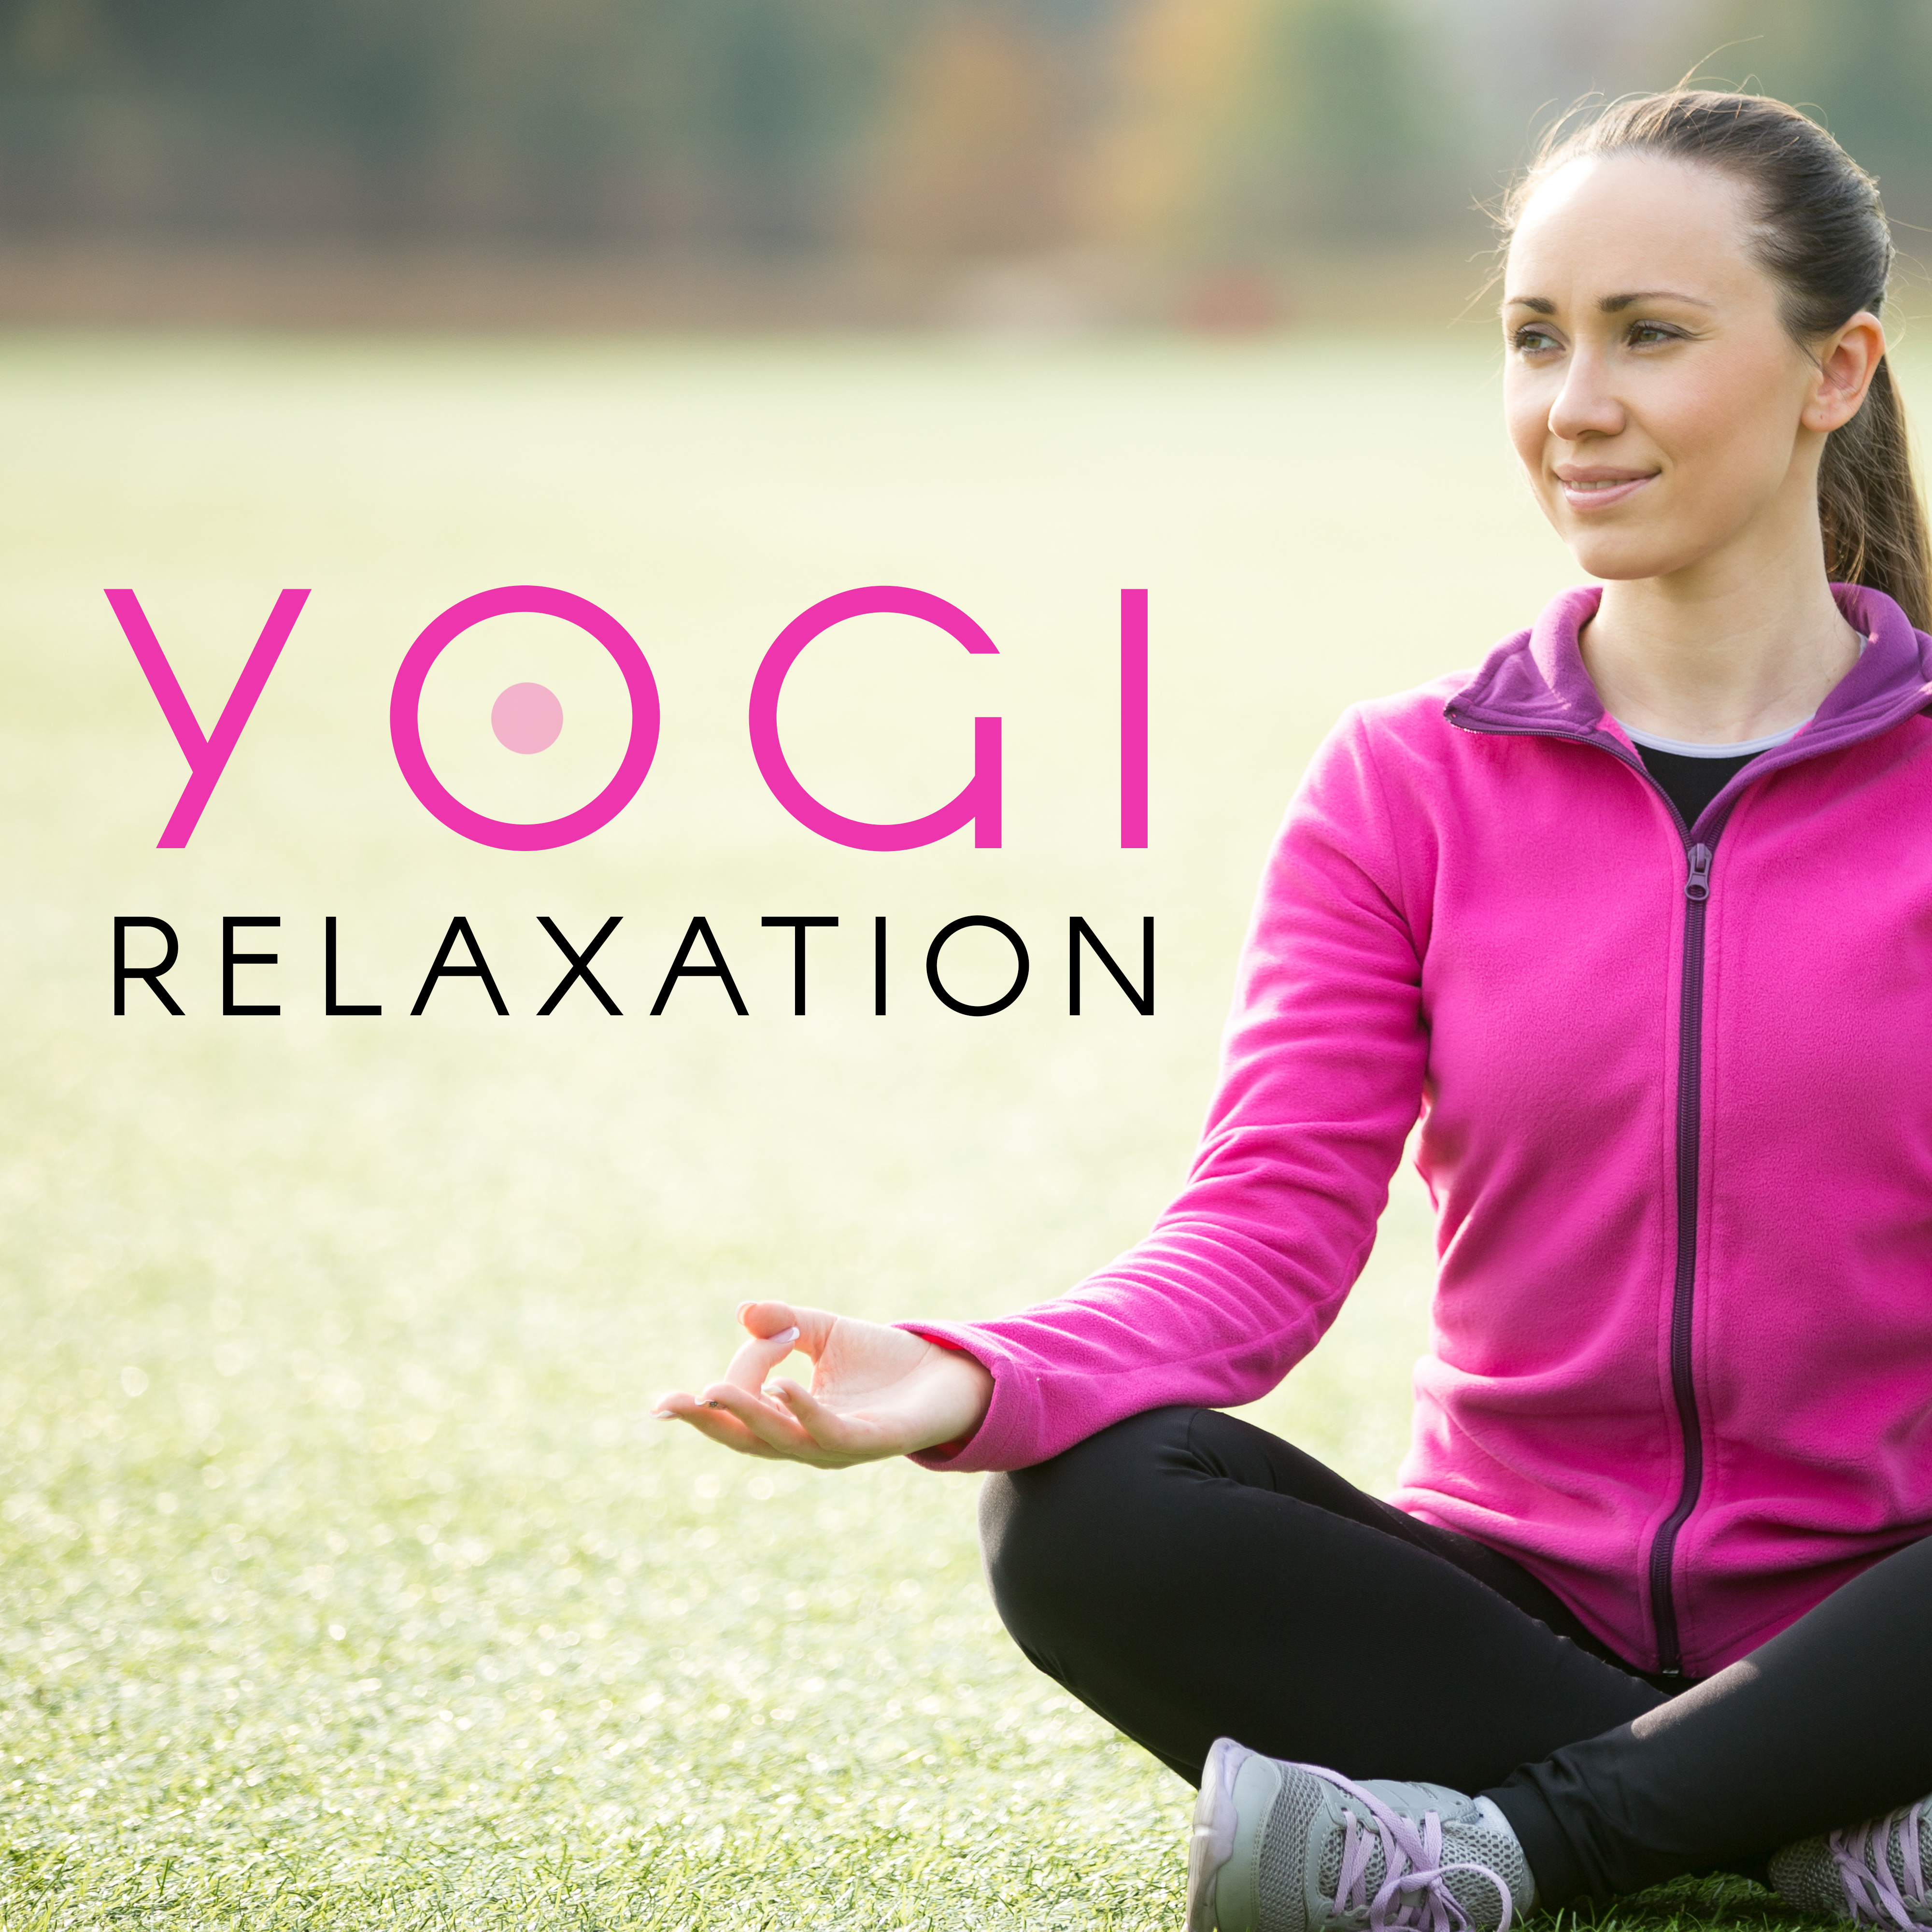 Yogi Relaxation